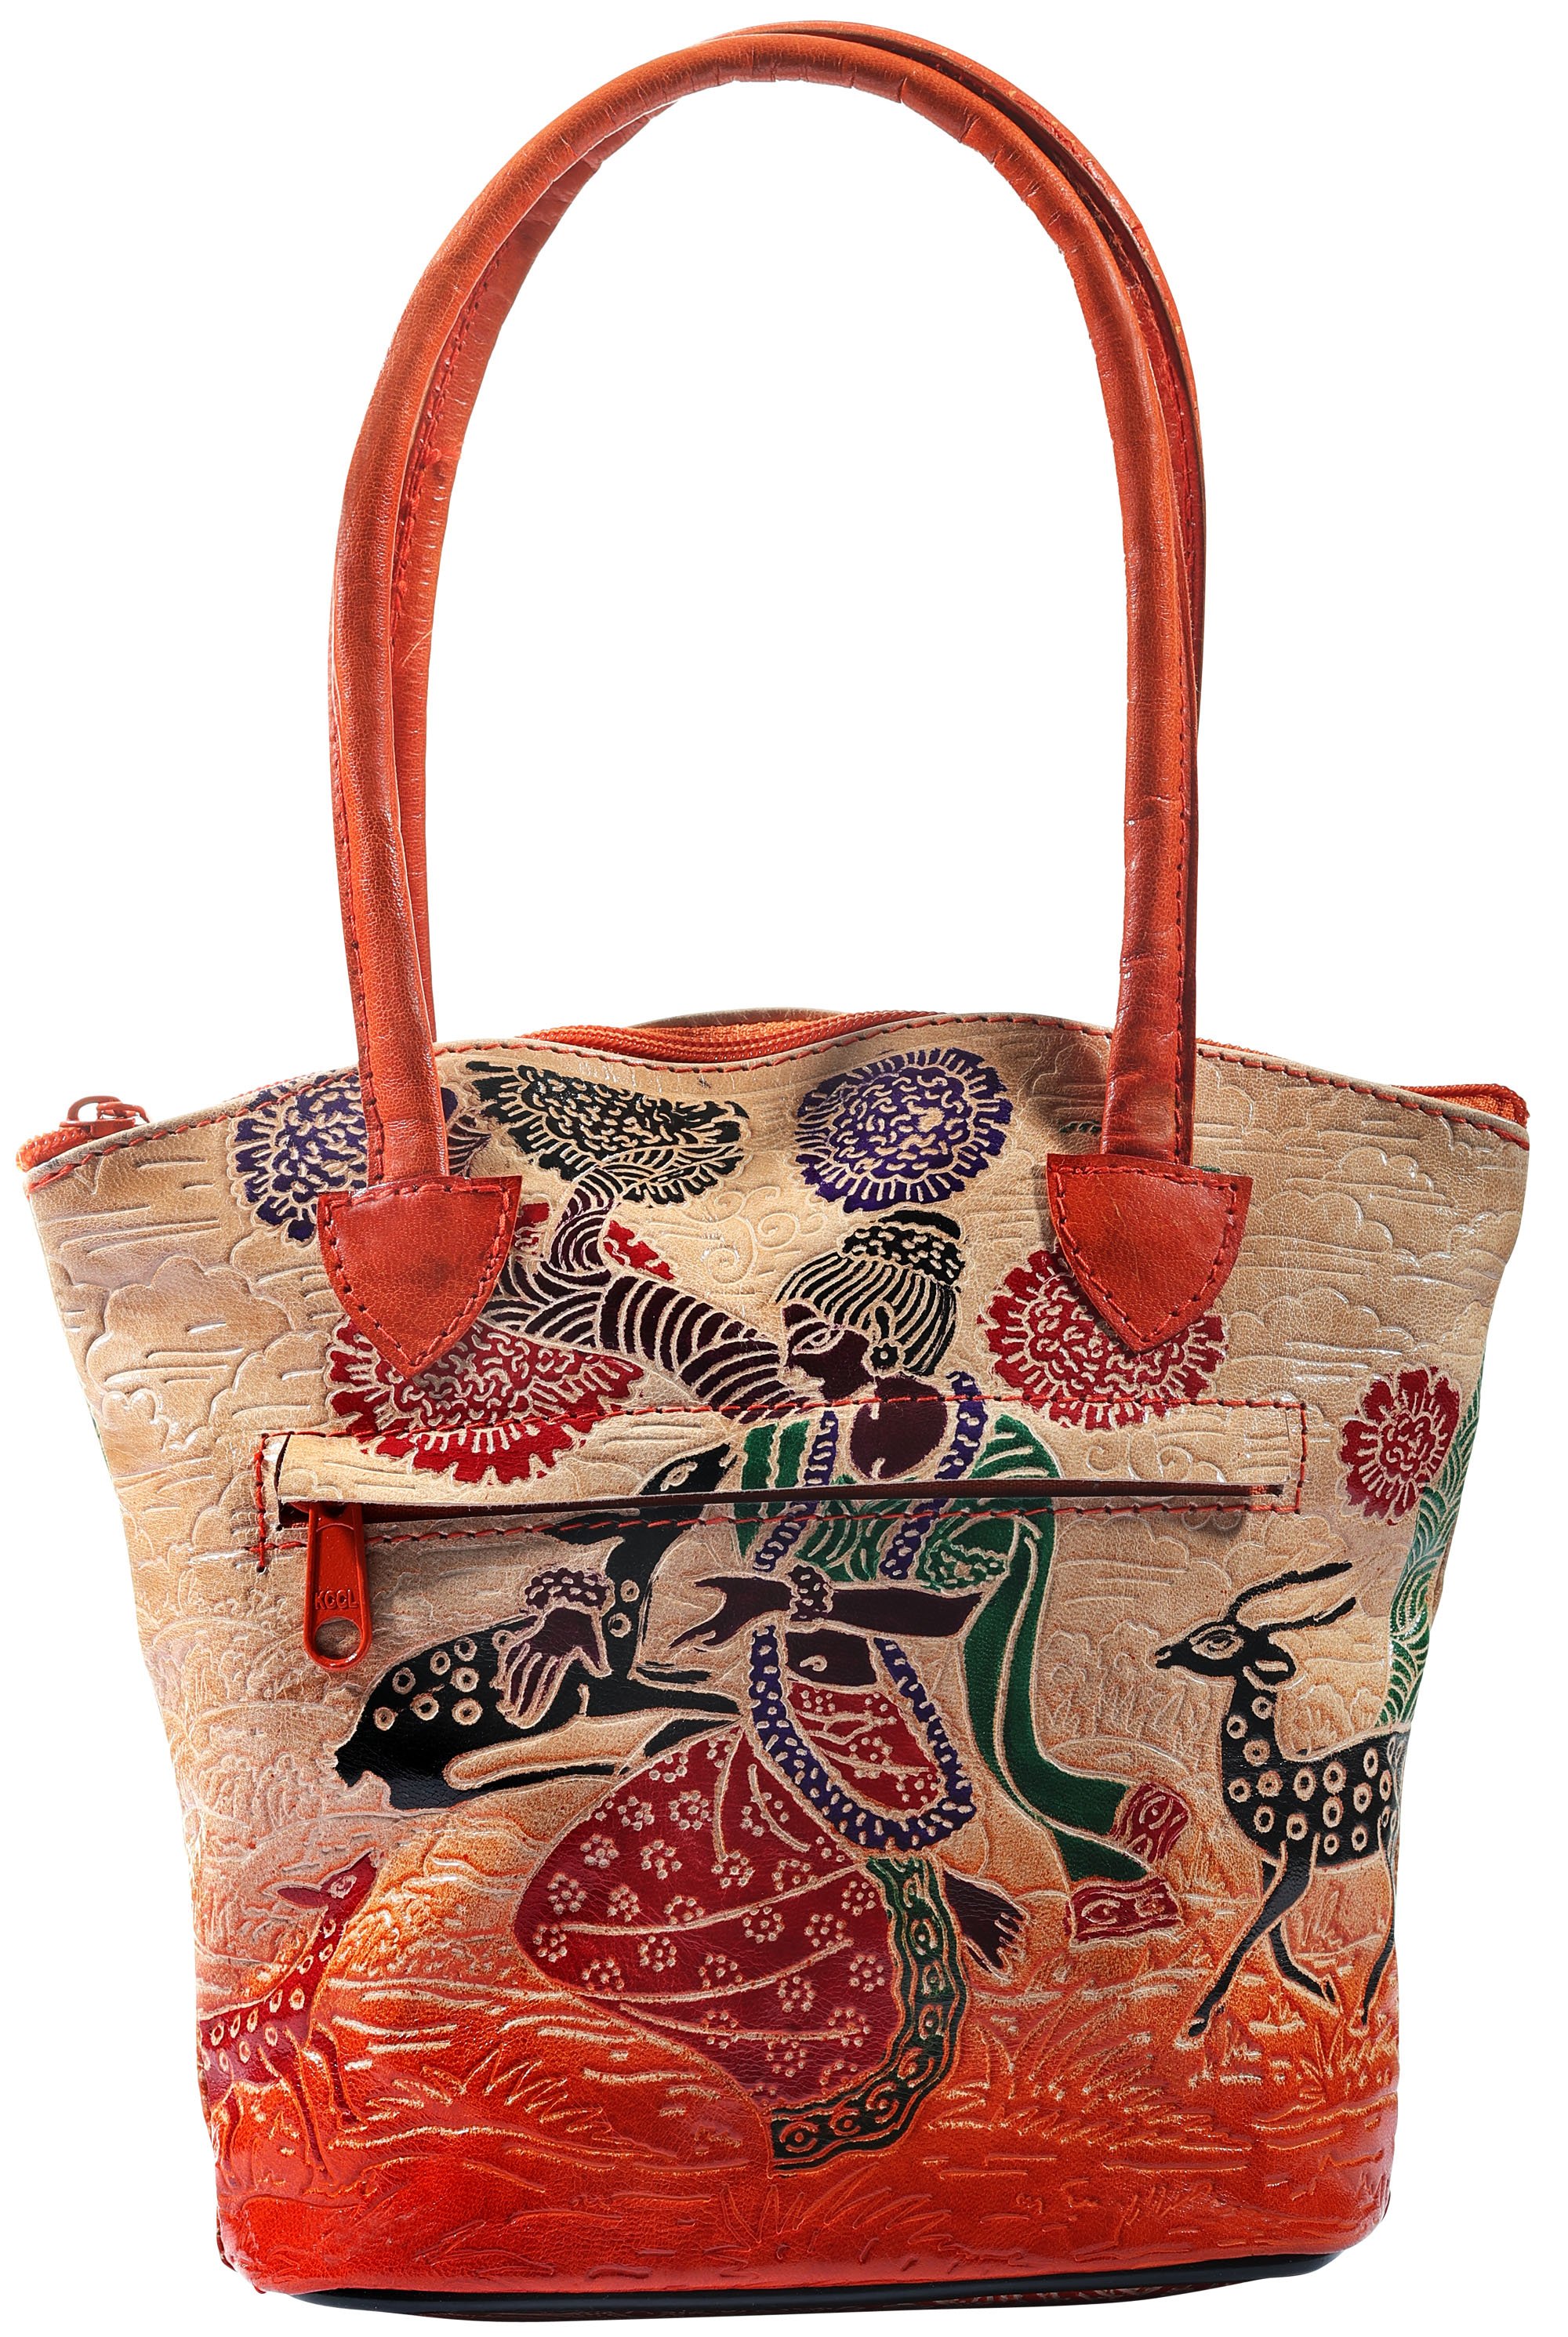 Pure Leather Boho Hand-Bag from Shantiniketan Kolkata, Hand-Carved and ...